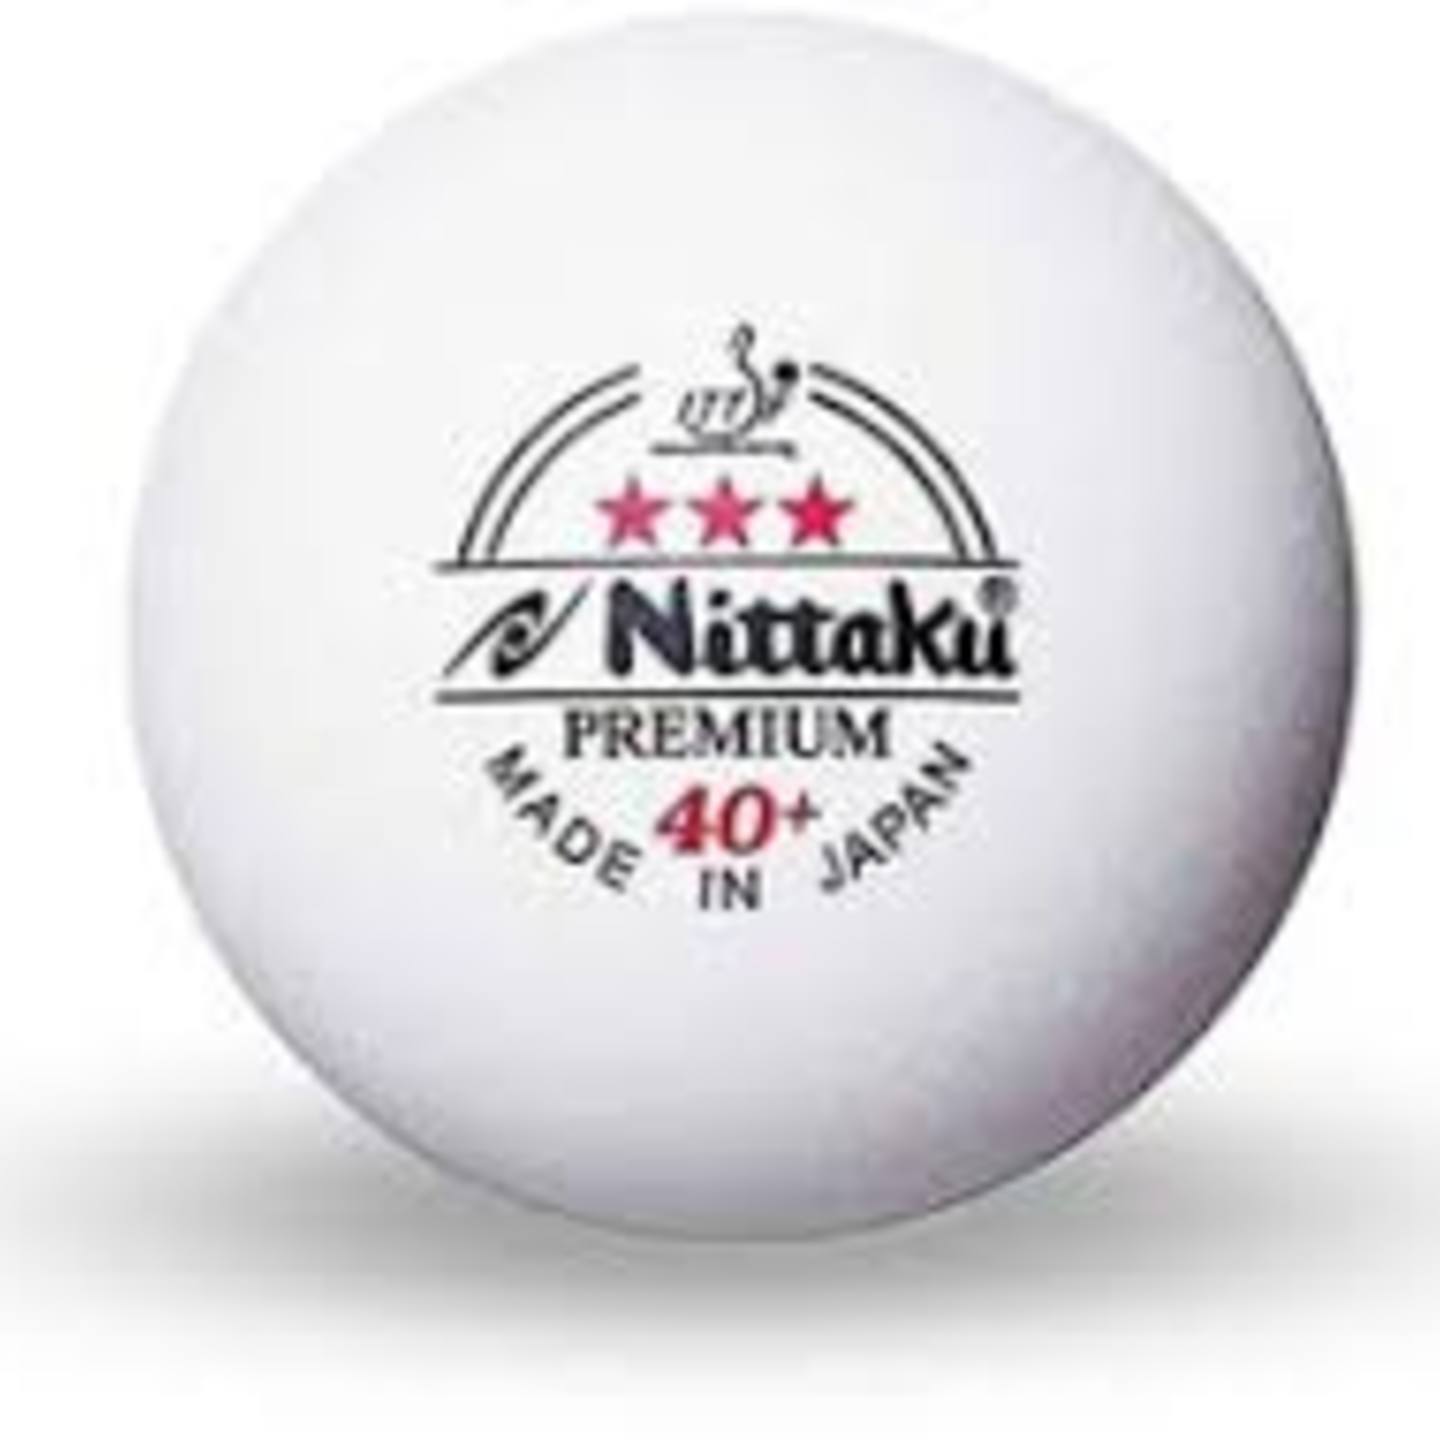 NITTAKU 3 STAR PLASTIC TABLE TENNIS BALL